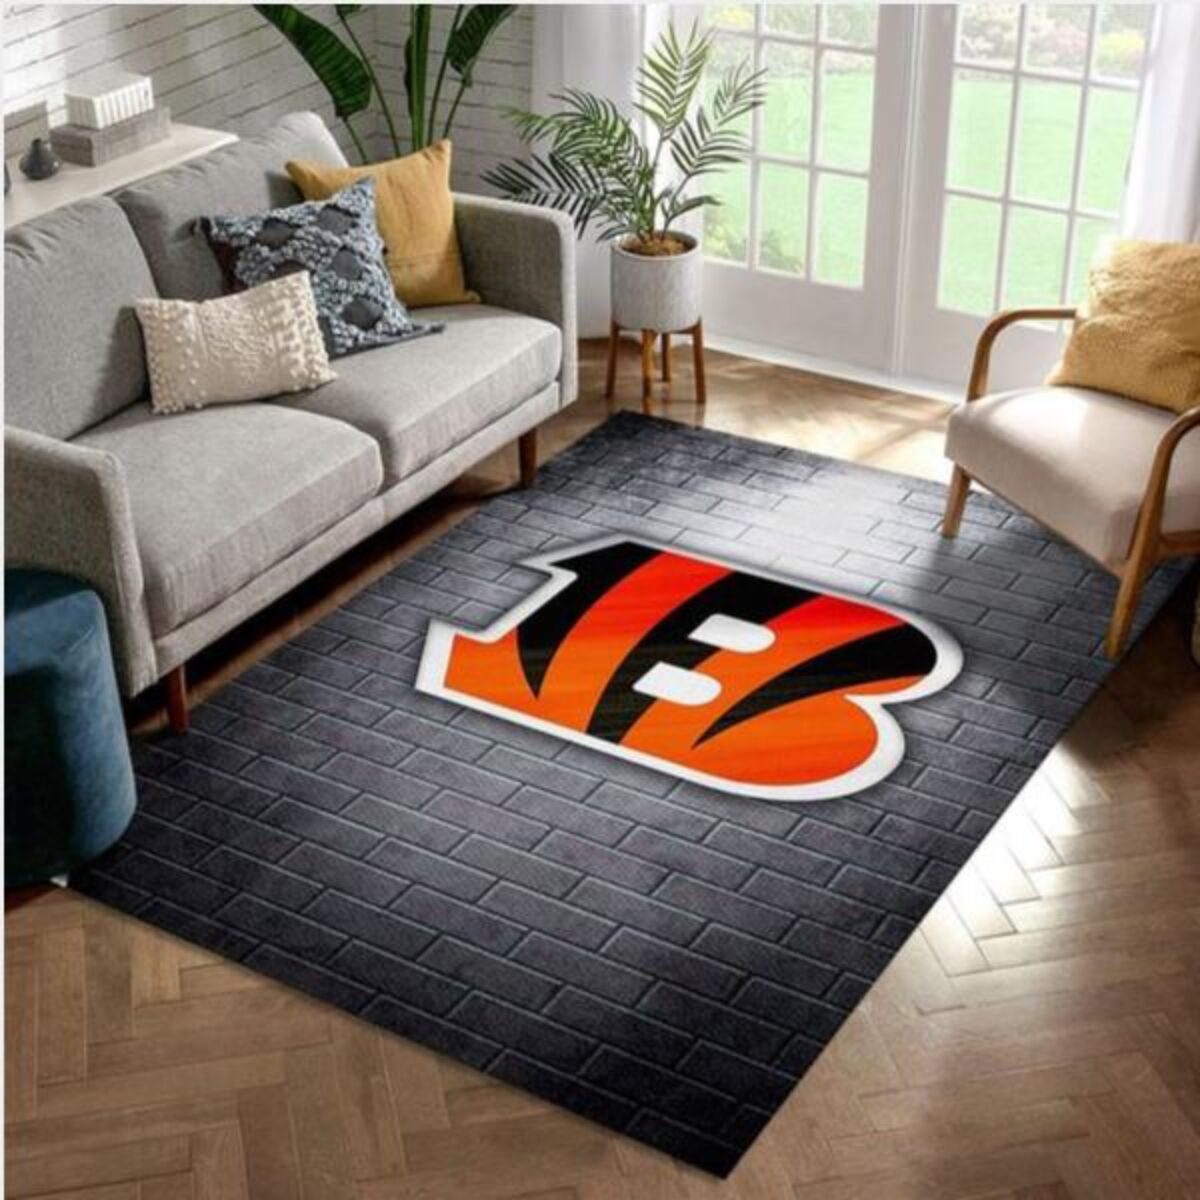 Cincinnati Bengals football shaped mat